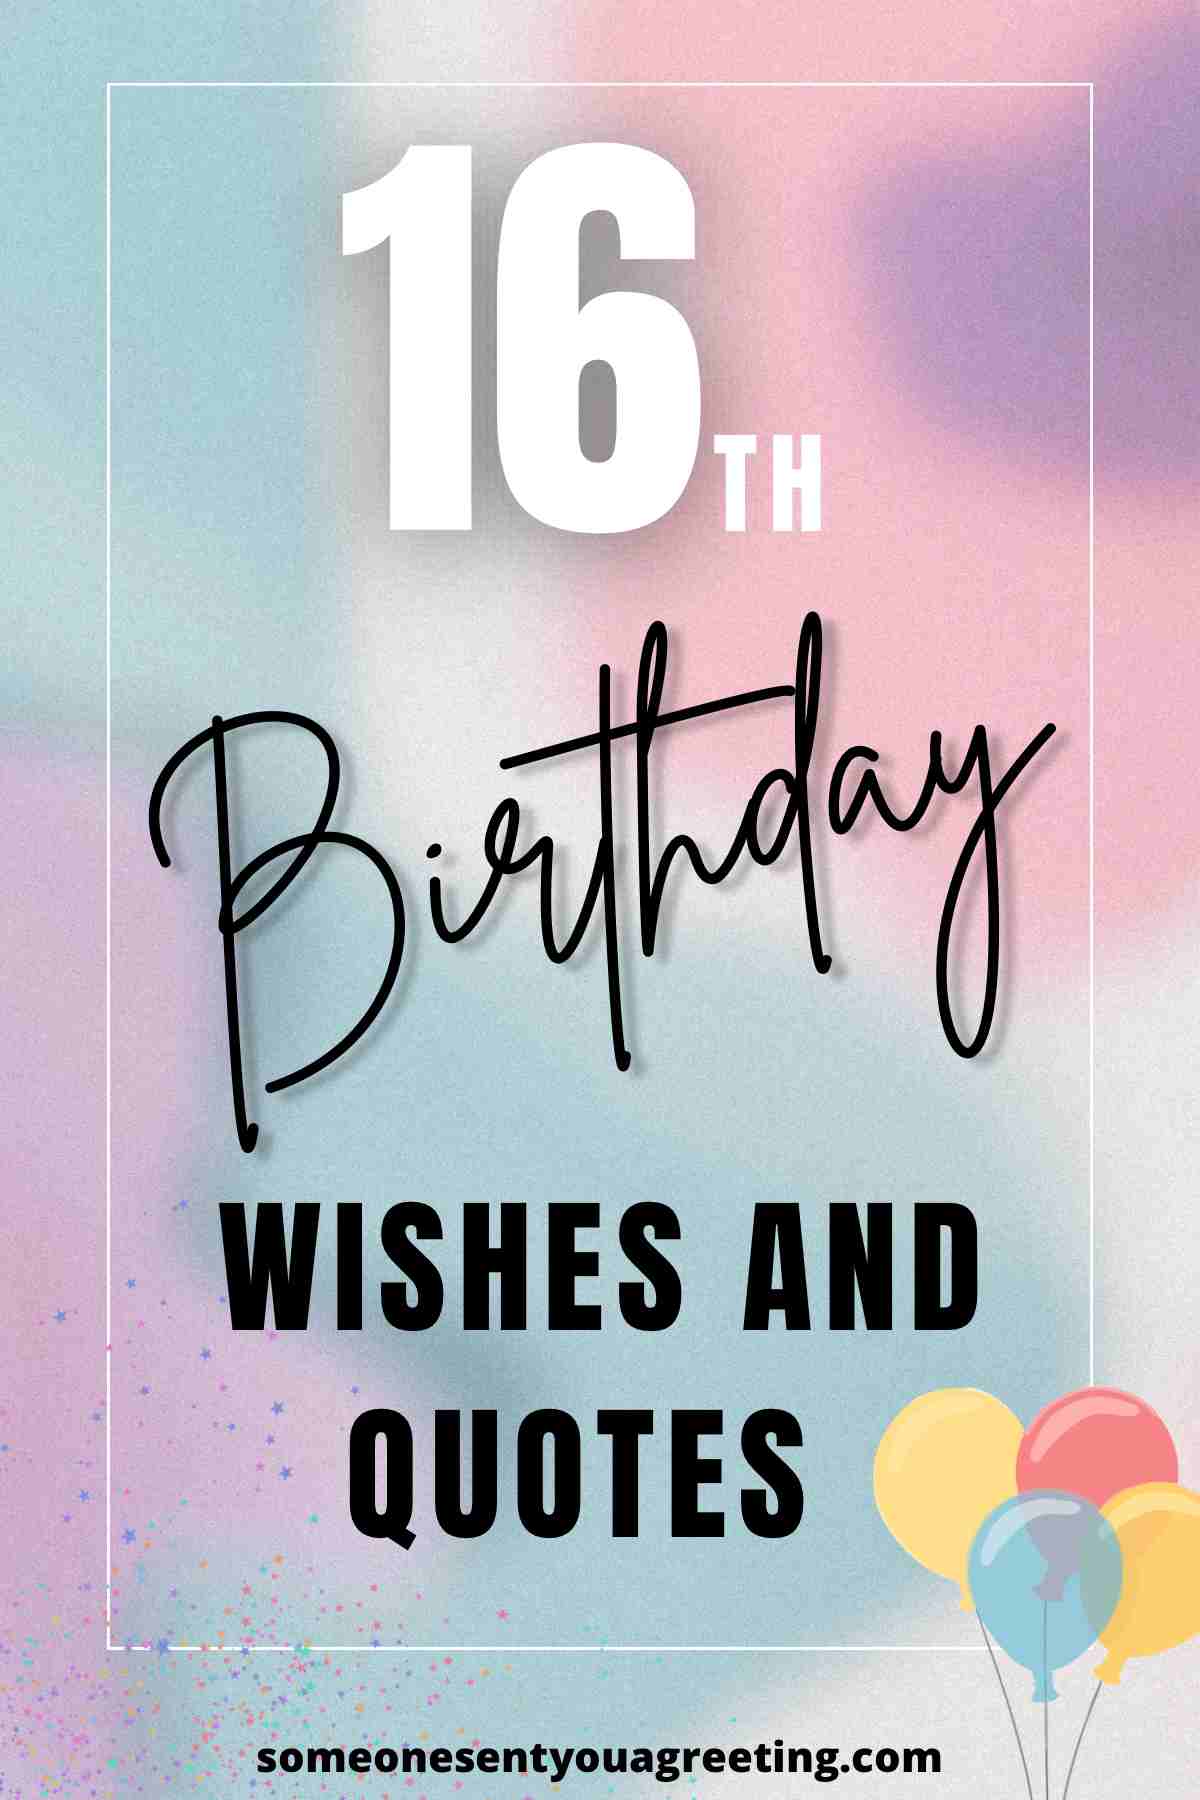 16th birthday wishes